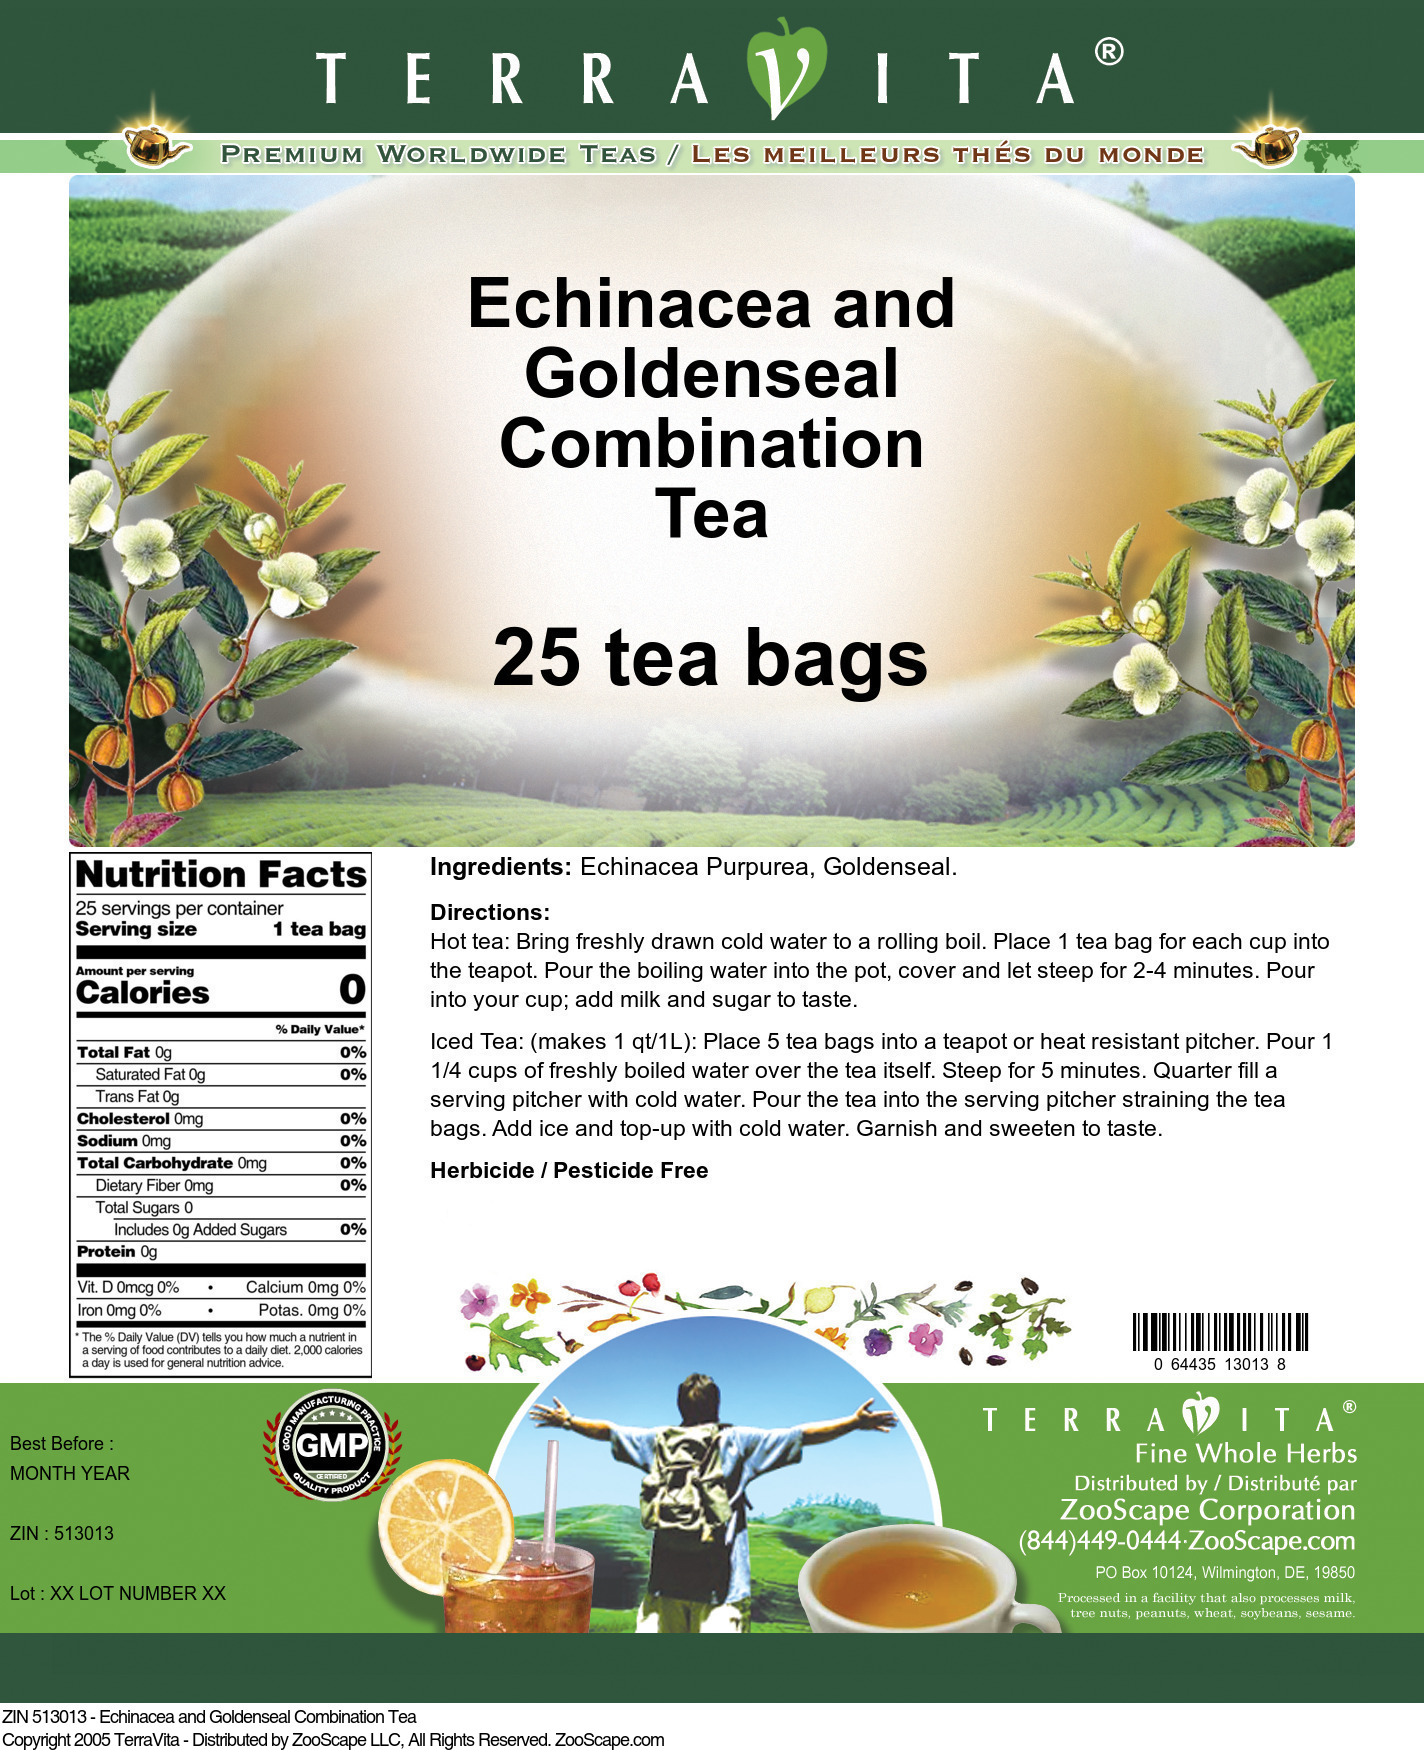 Echinacea and Goldenseal Combination Tea - Label